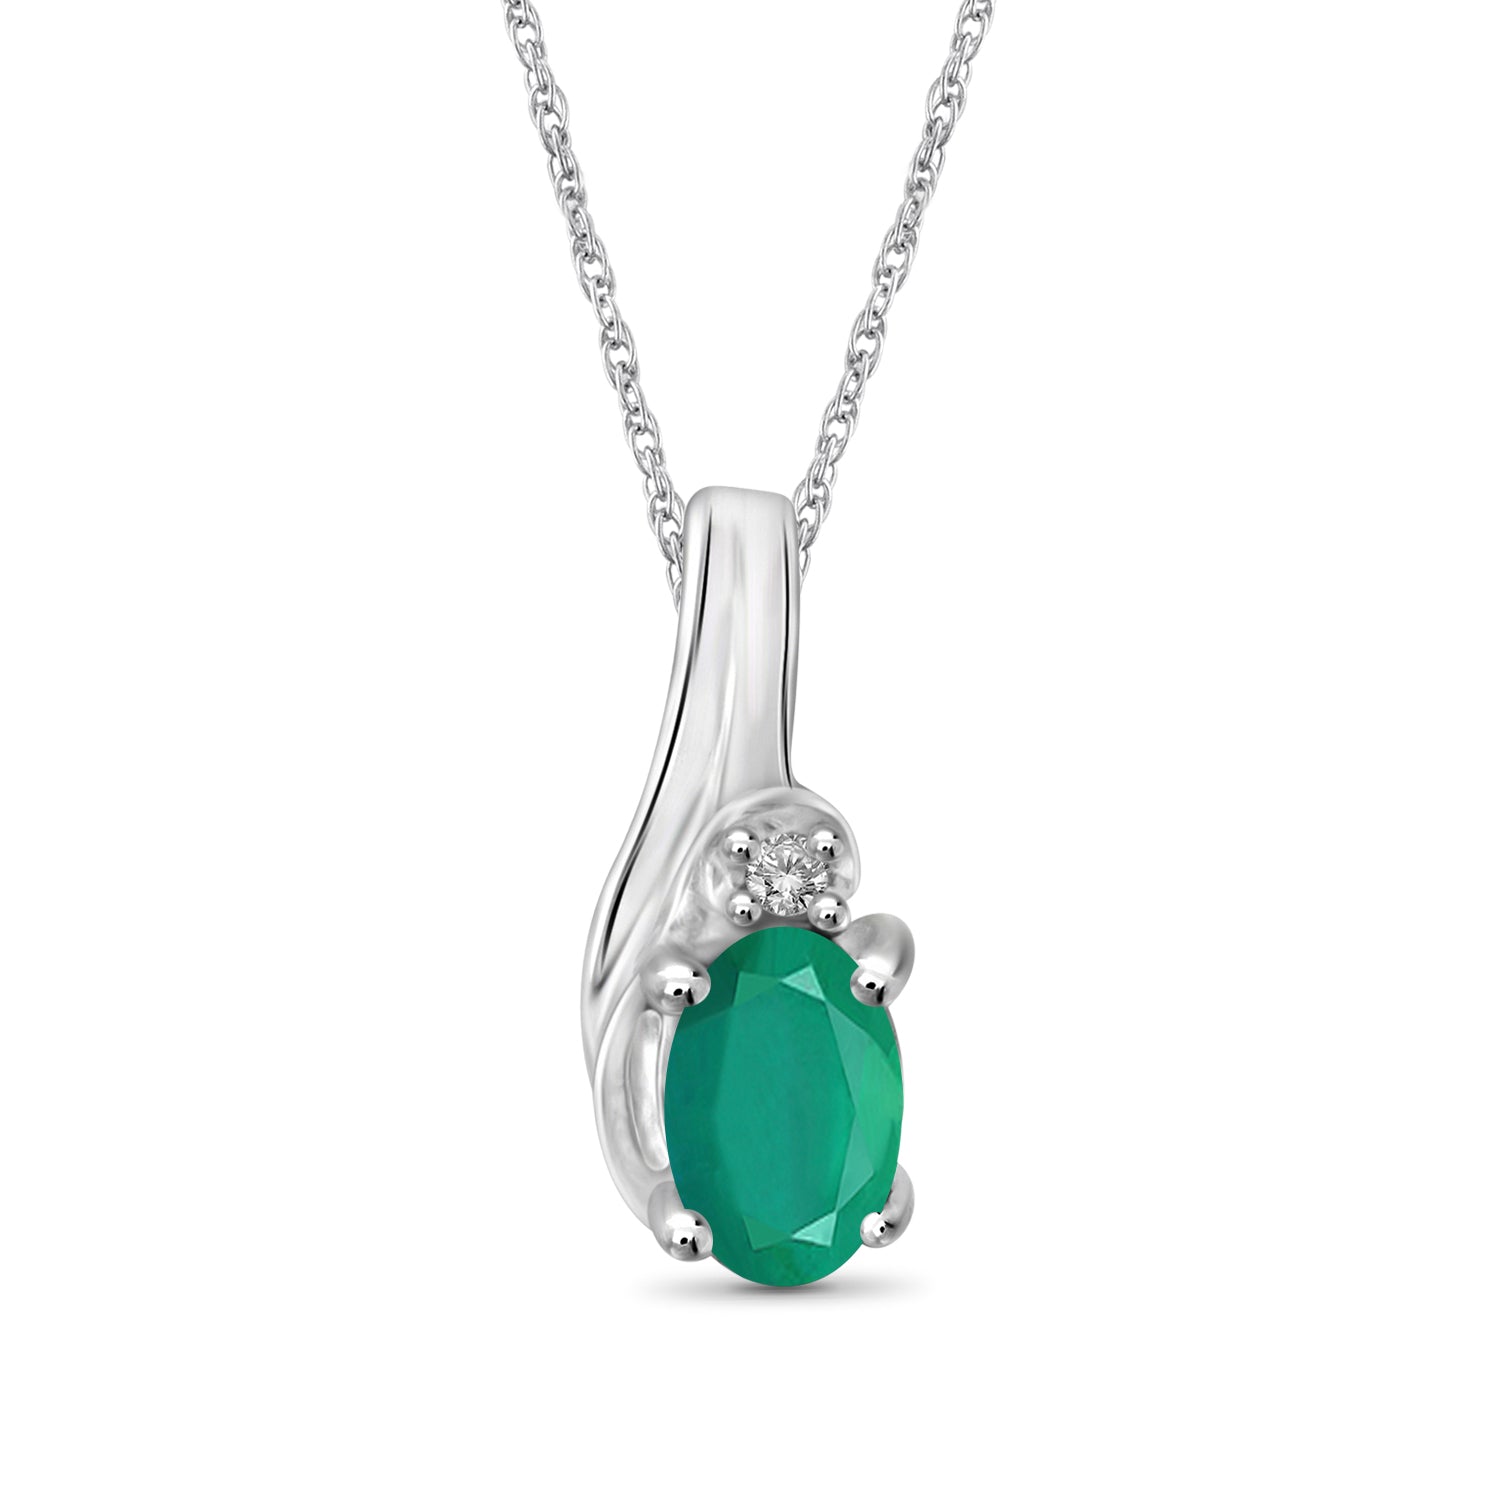 0.23 Ctw Genuine Emerald And White Diamond Accent Sterling Silver Pendant, 18"